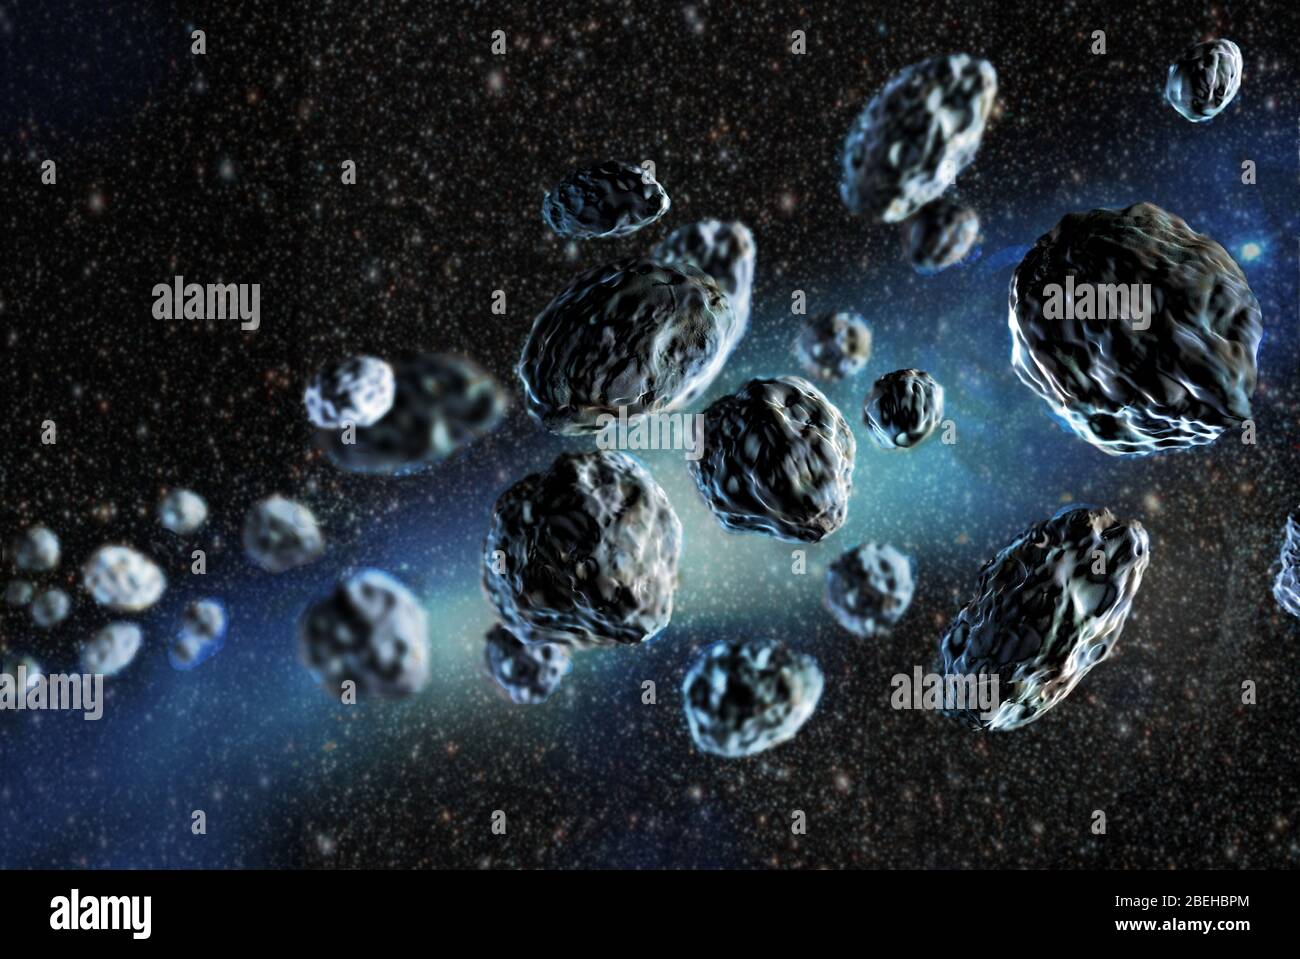 Grupo de asteroides, ilustración. Foto de stock